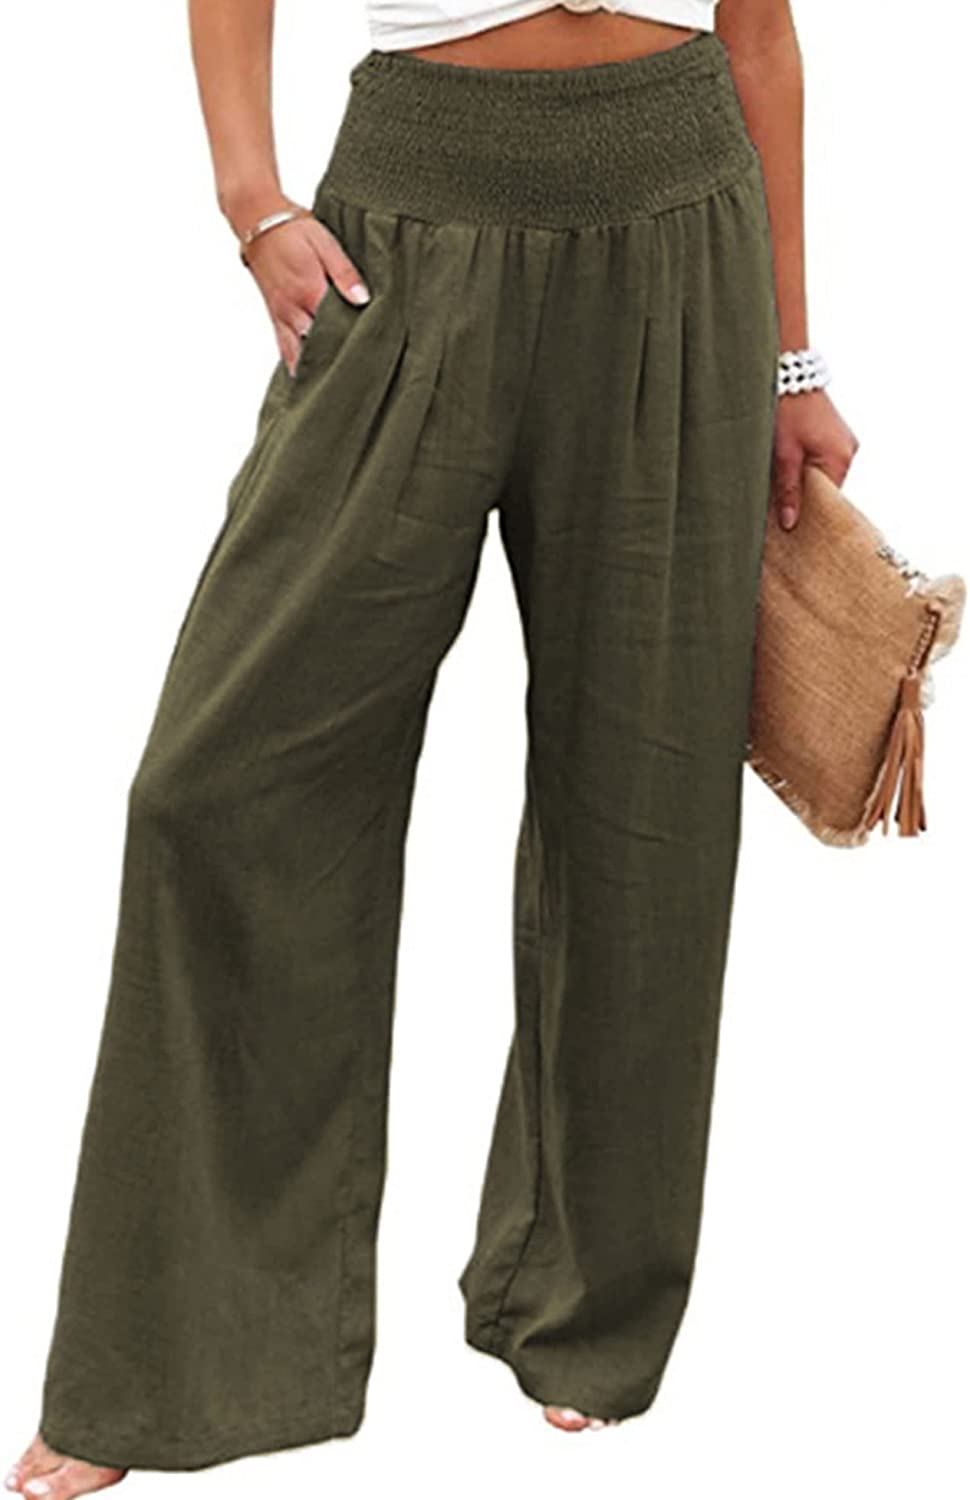 Women's High Waist Cotton Linen Pants Elastic Straight Wide Leg Smocked Pockets Beach Pants